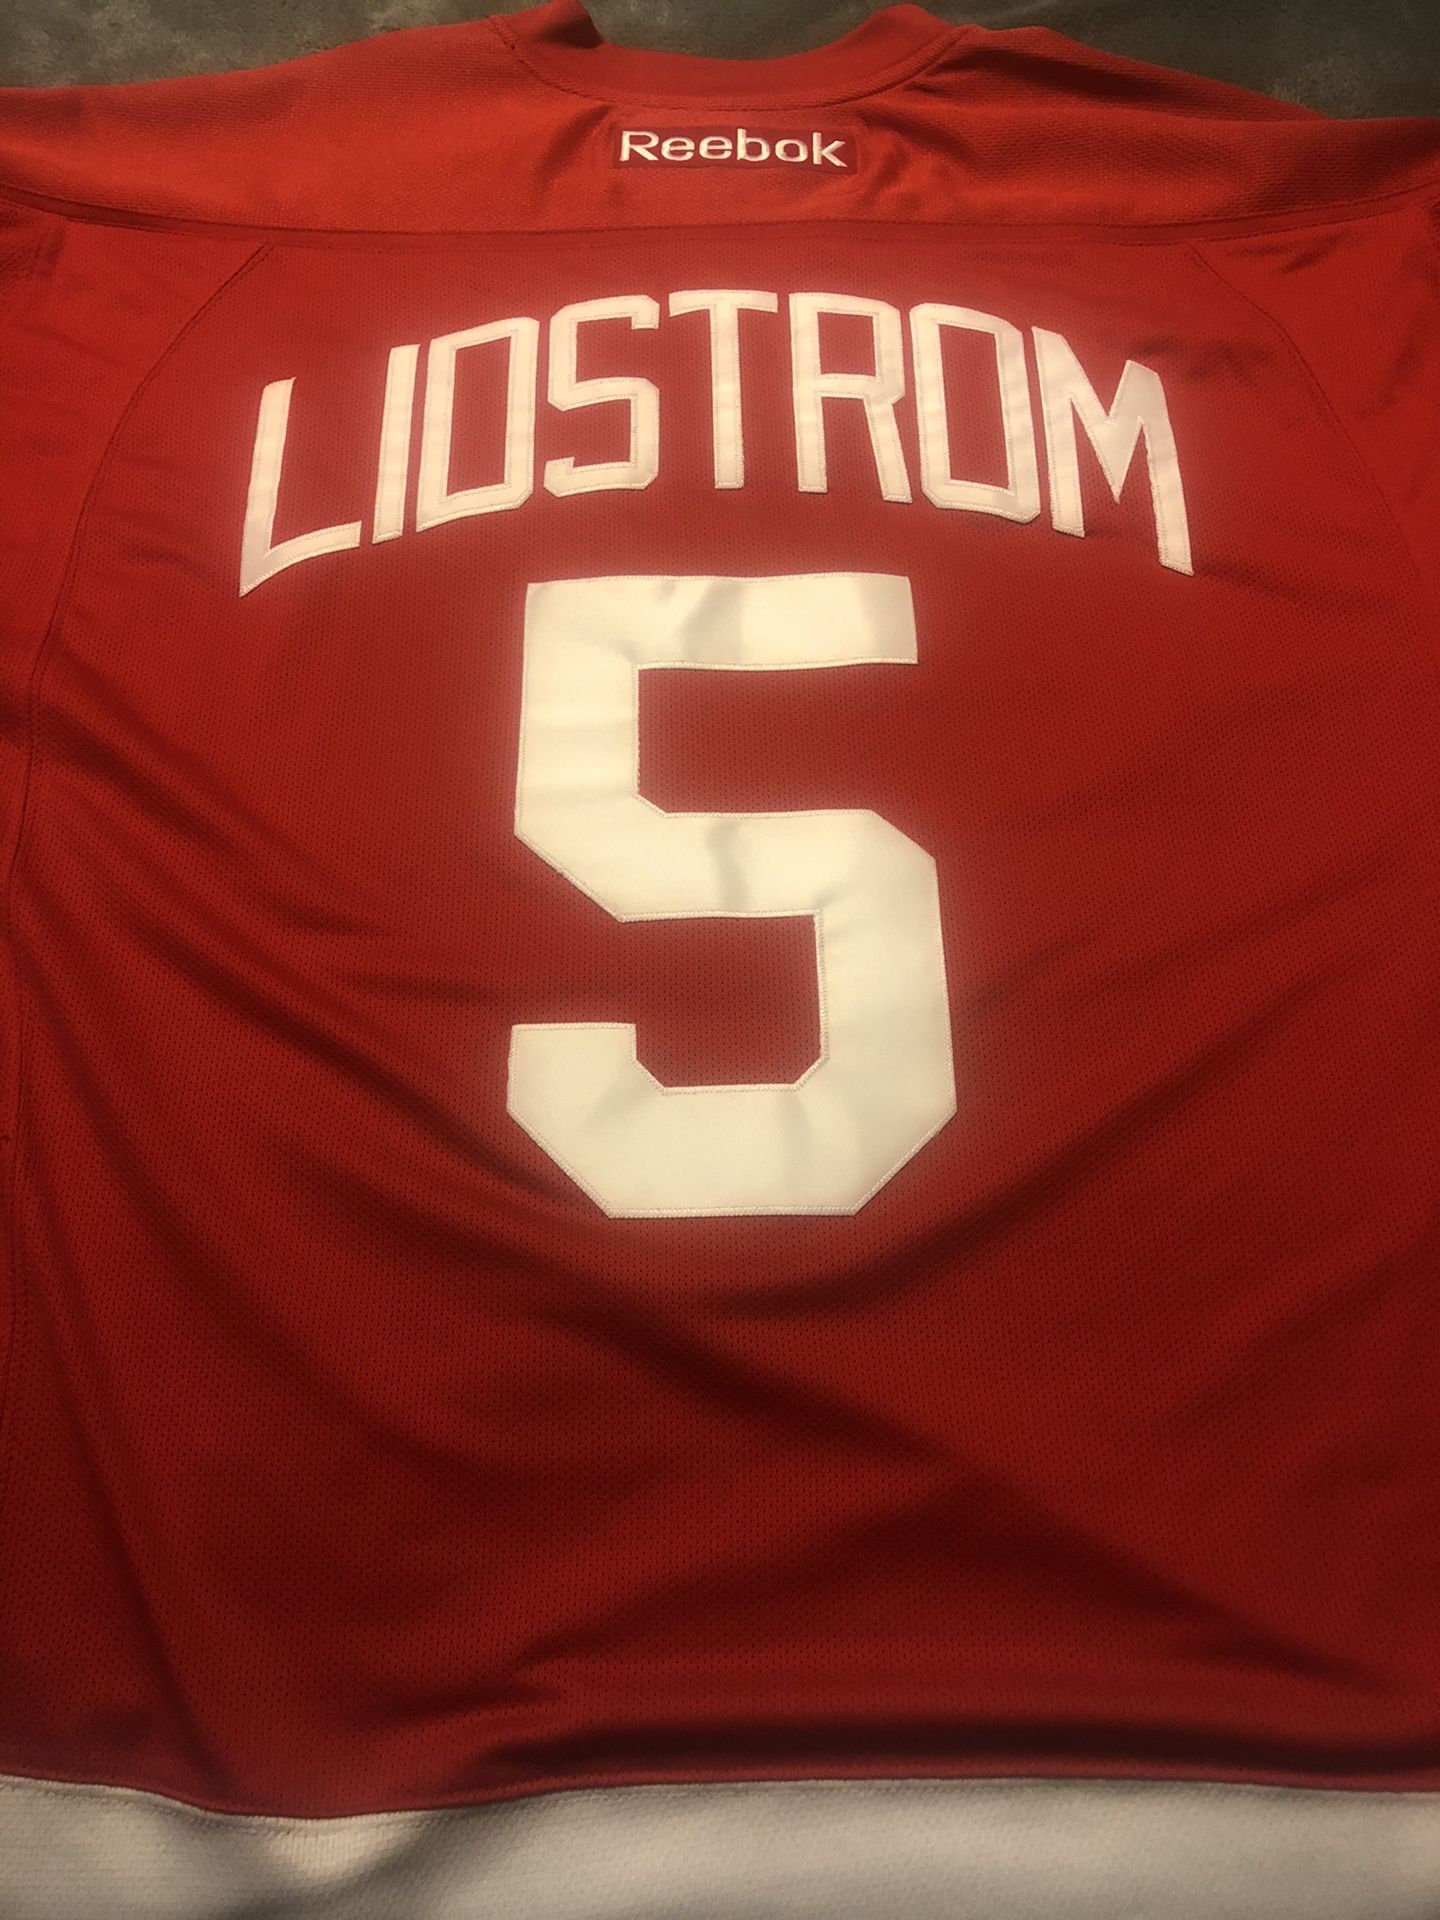 Detroit Red Wings #5 Nicklas Lidstrom Jersey! Reebok, size Large! Like New!